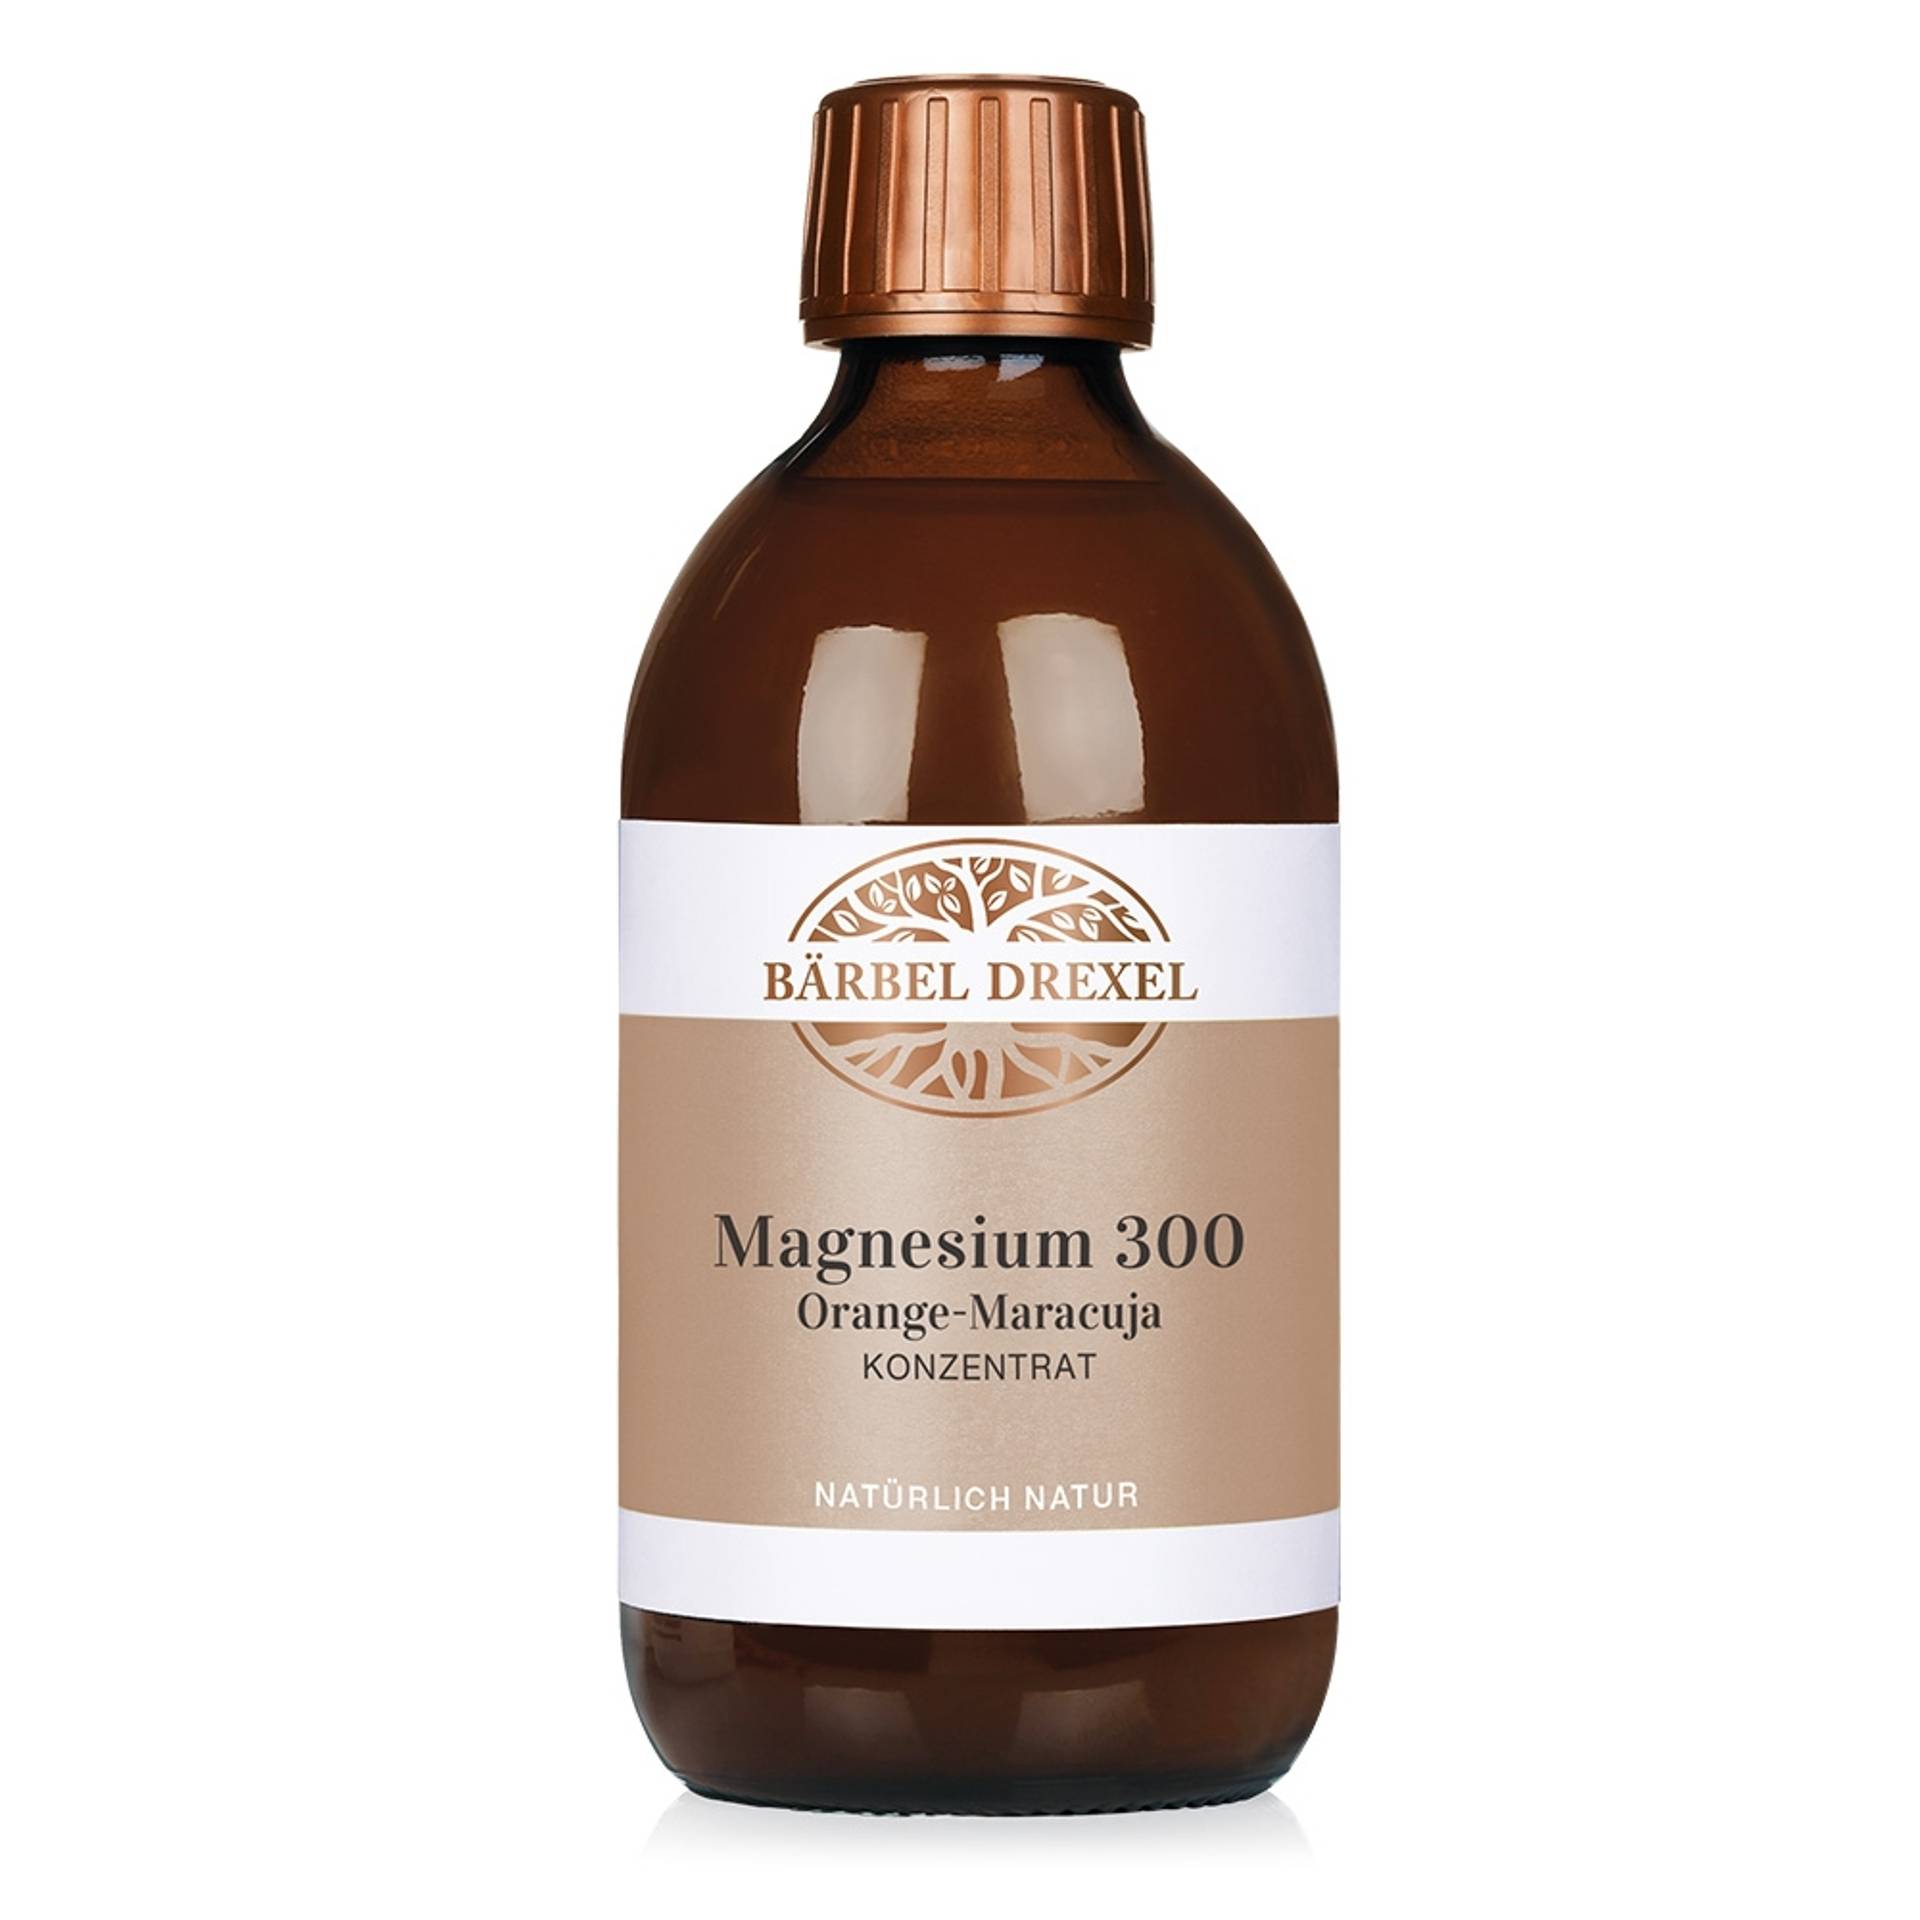 76913-magnesium-300-orange-maracuja-konzentrat-300ml_ohne-deko_1_1.jpg